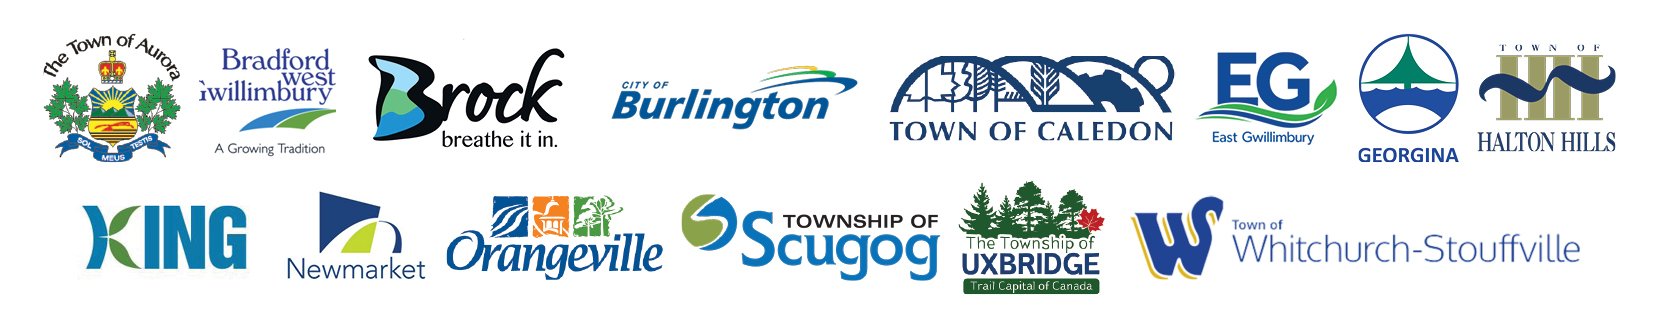 Greater Toronto Halton Region logos